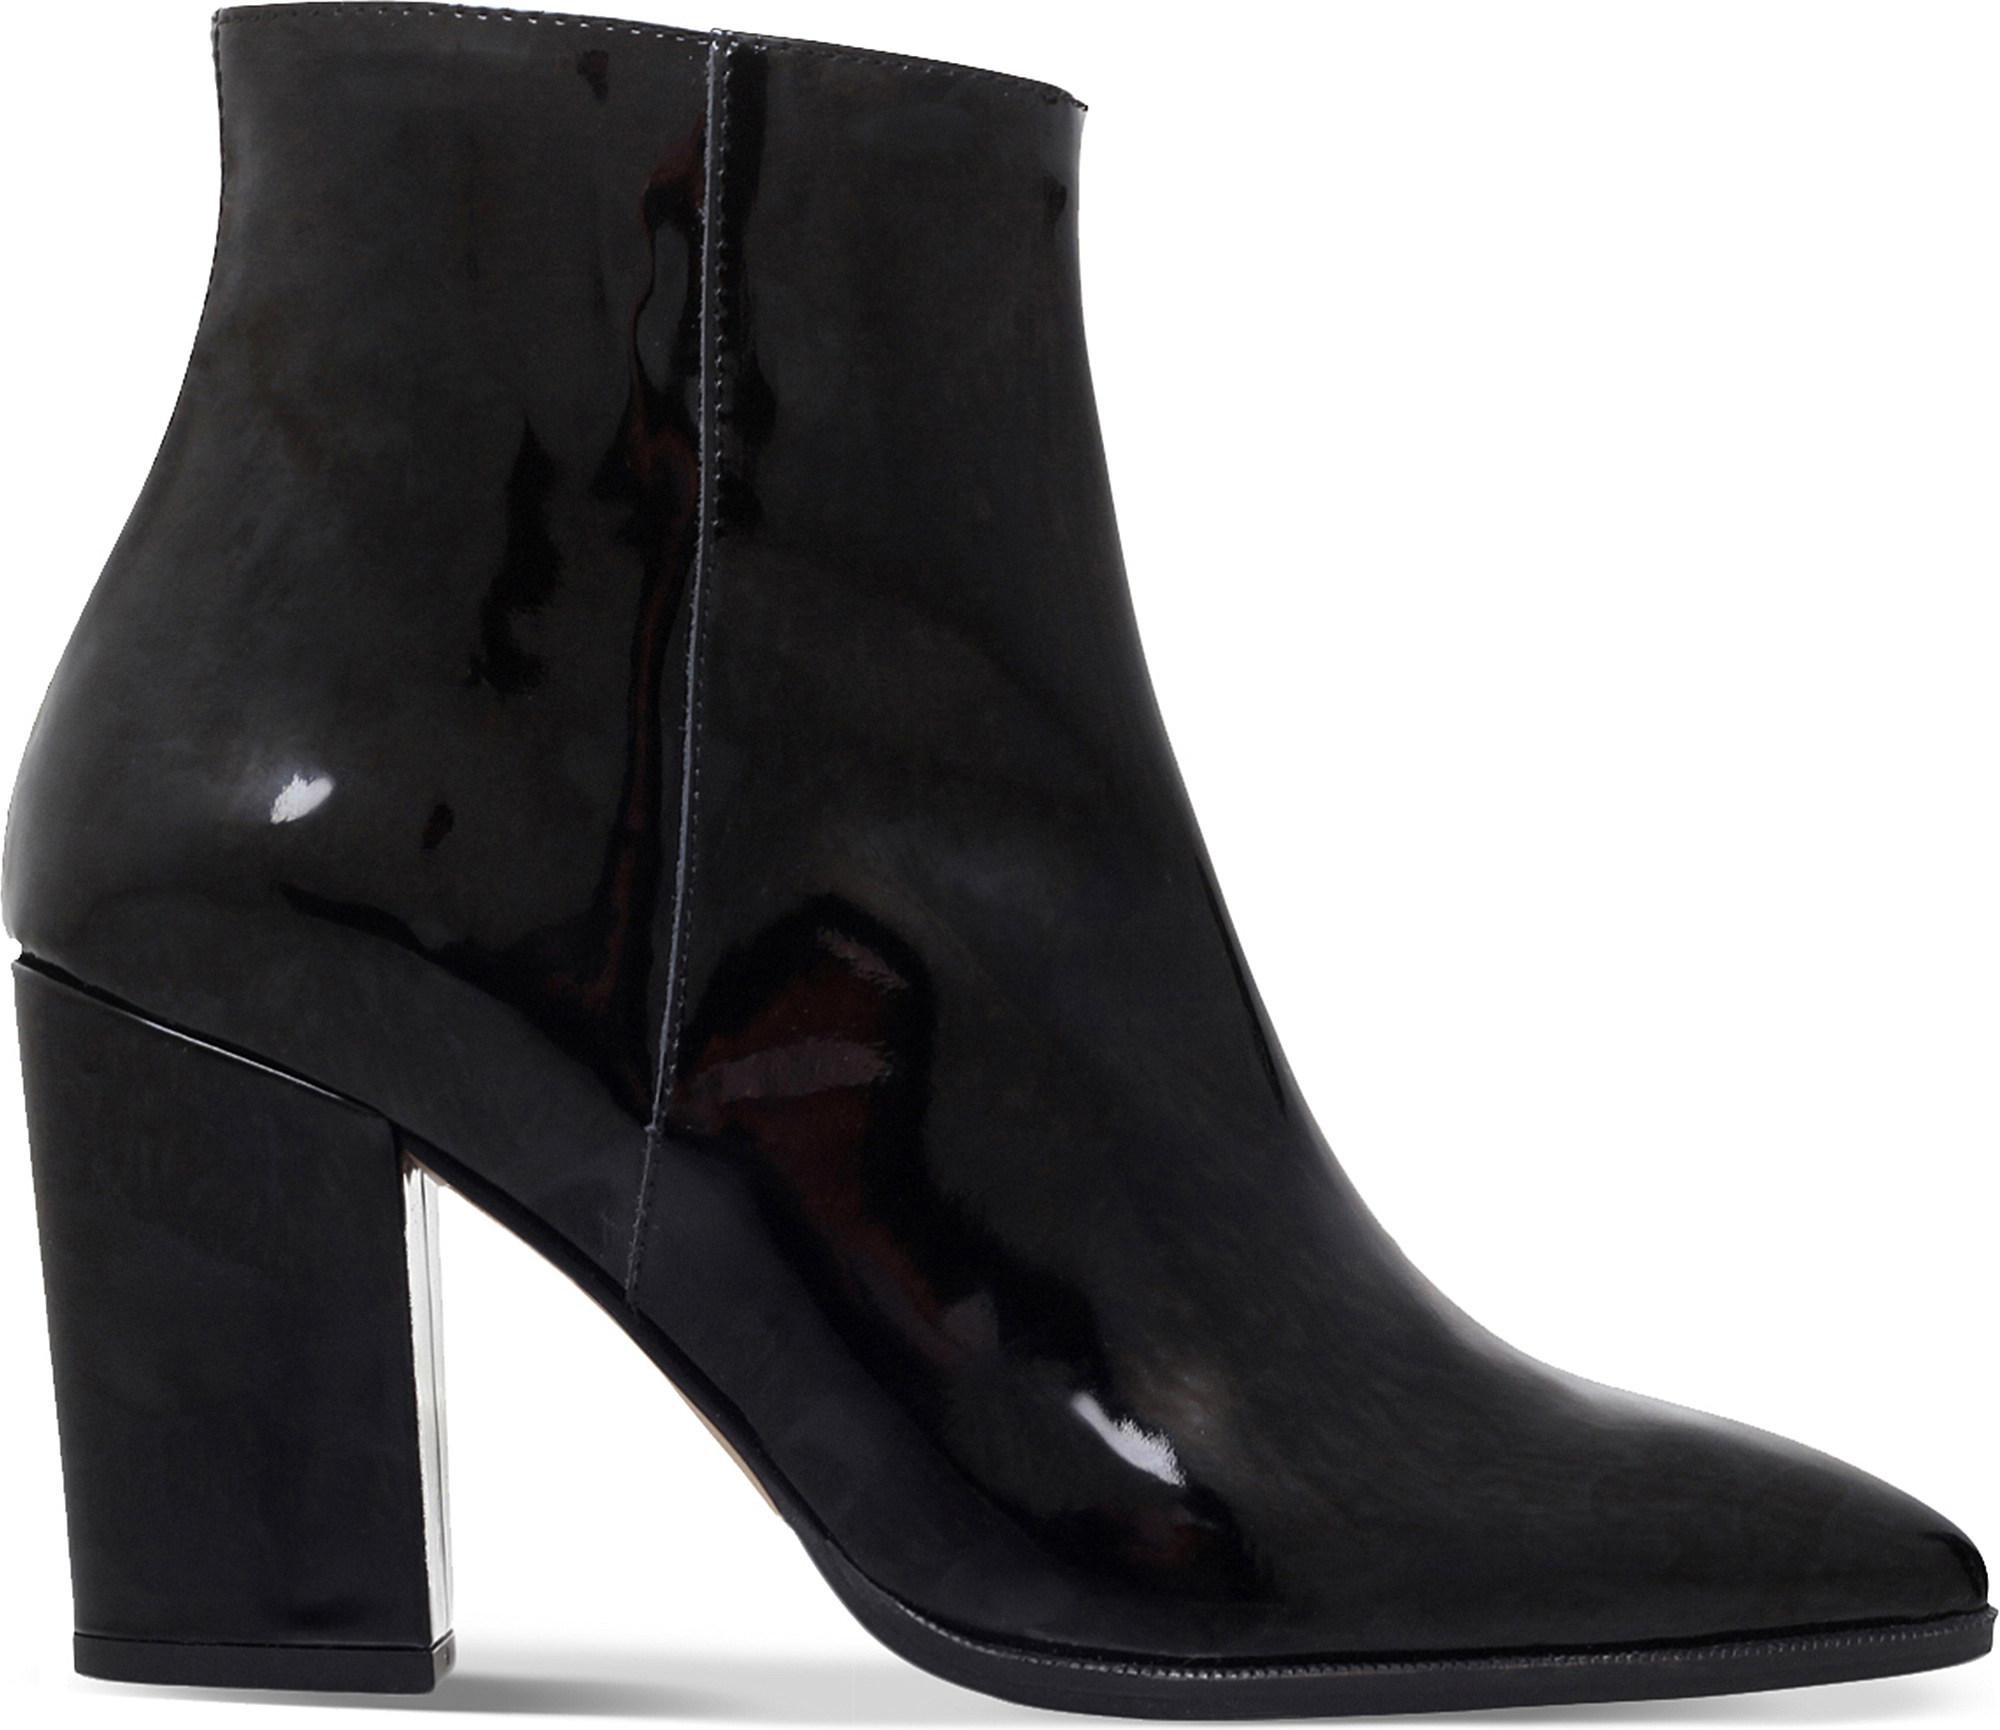 Carvela Kurt Geiger Sarah Patent-leather Ankle Boots in Black - Lyst